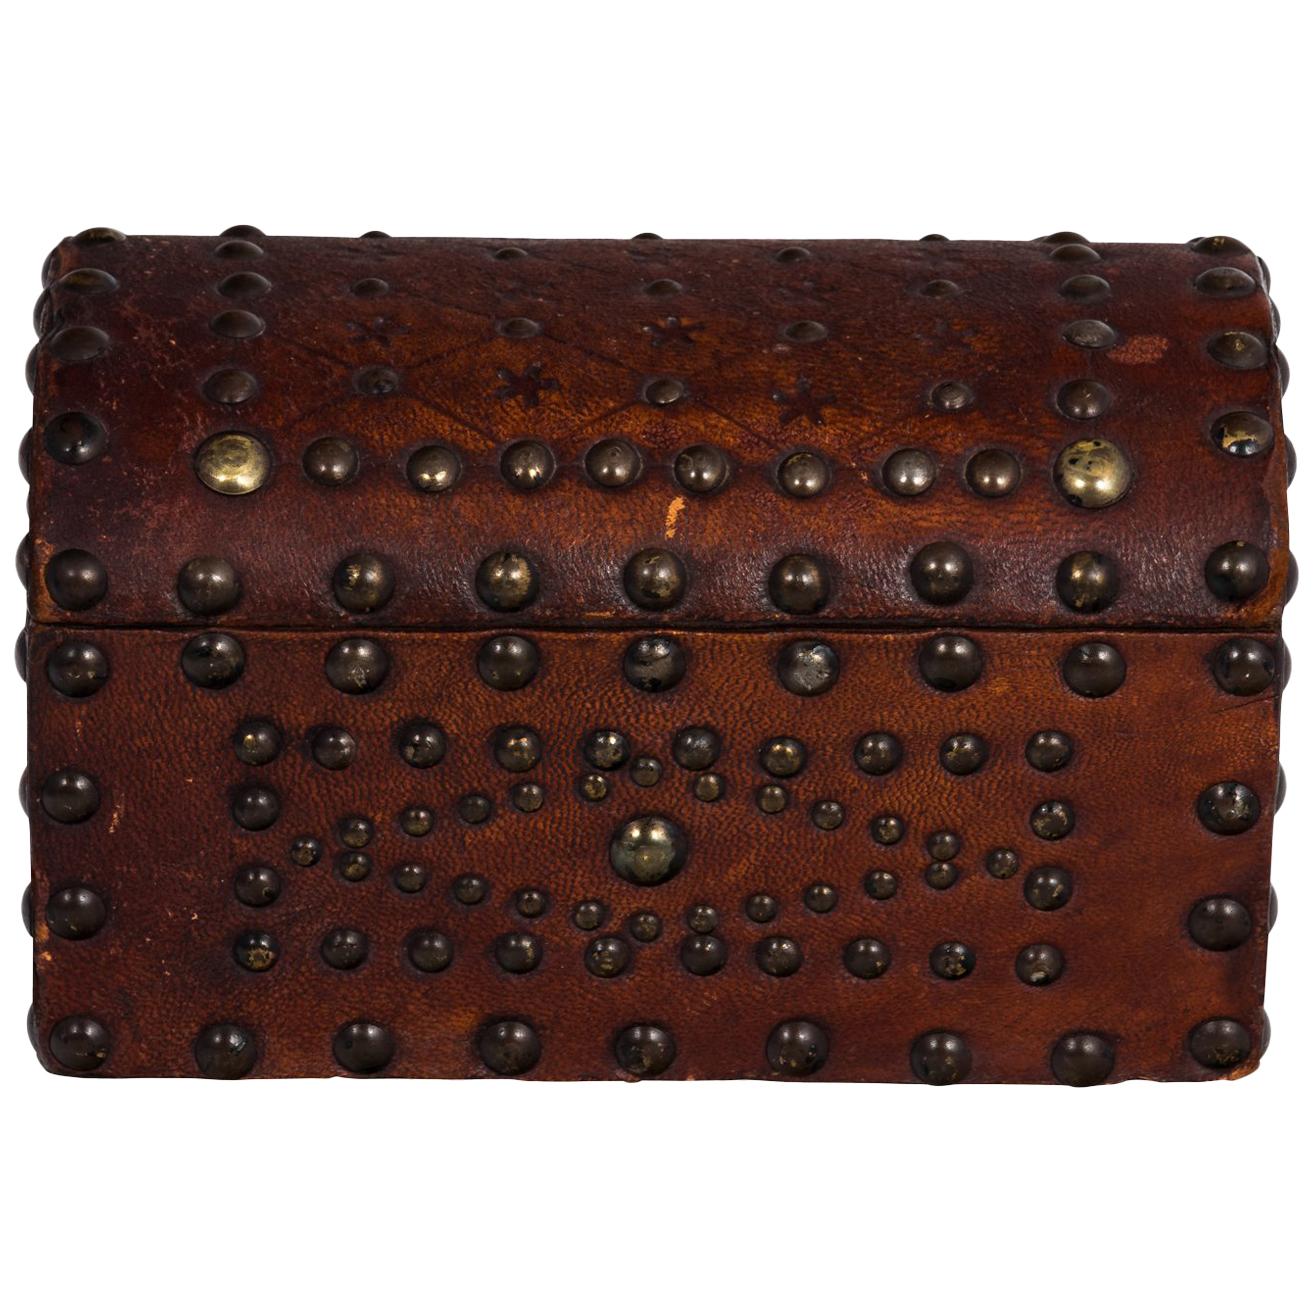 English Leather Box, circa 1850